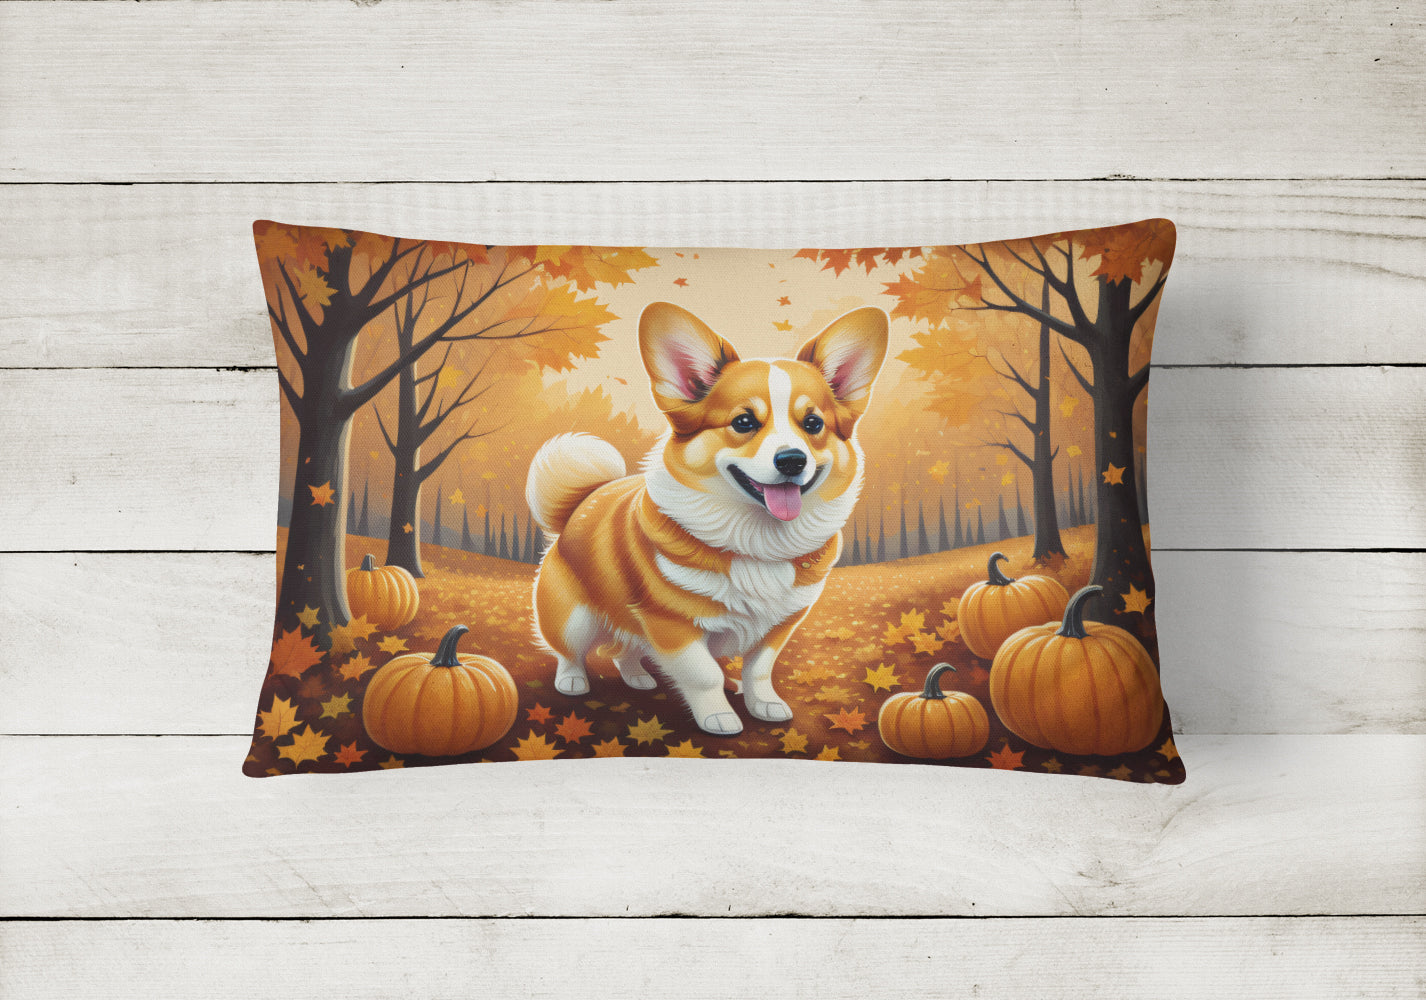 Buy this Corgi Fall Fabric Decorative Pillow